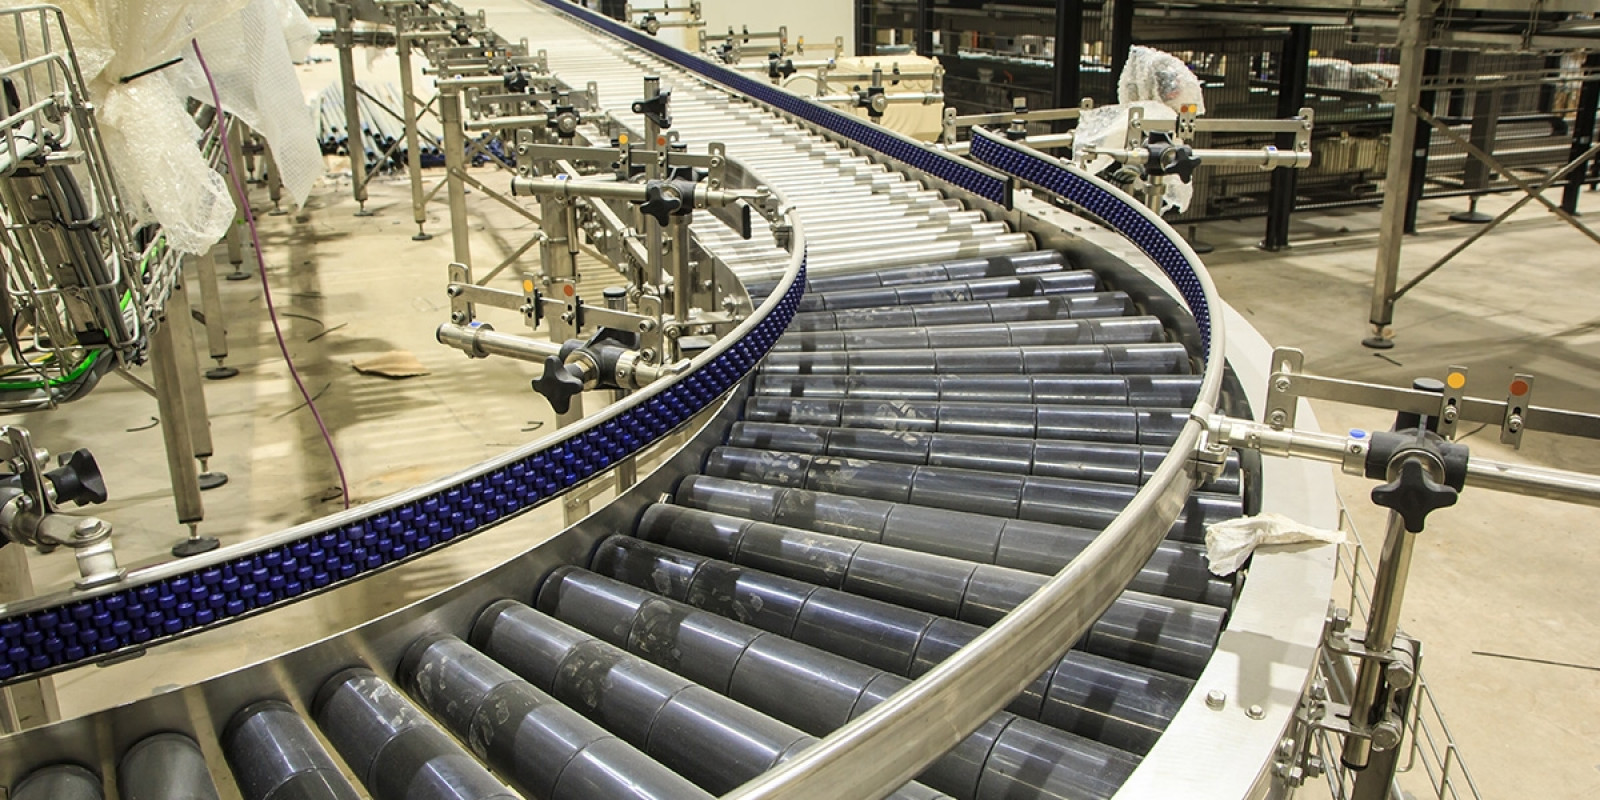 Conveyor Belt in a Factory